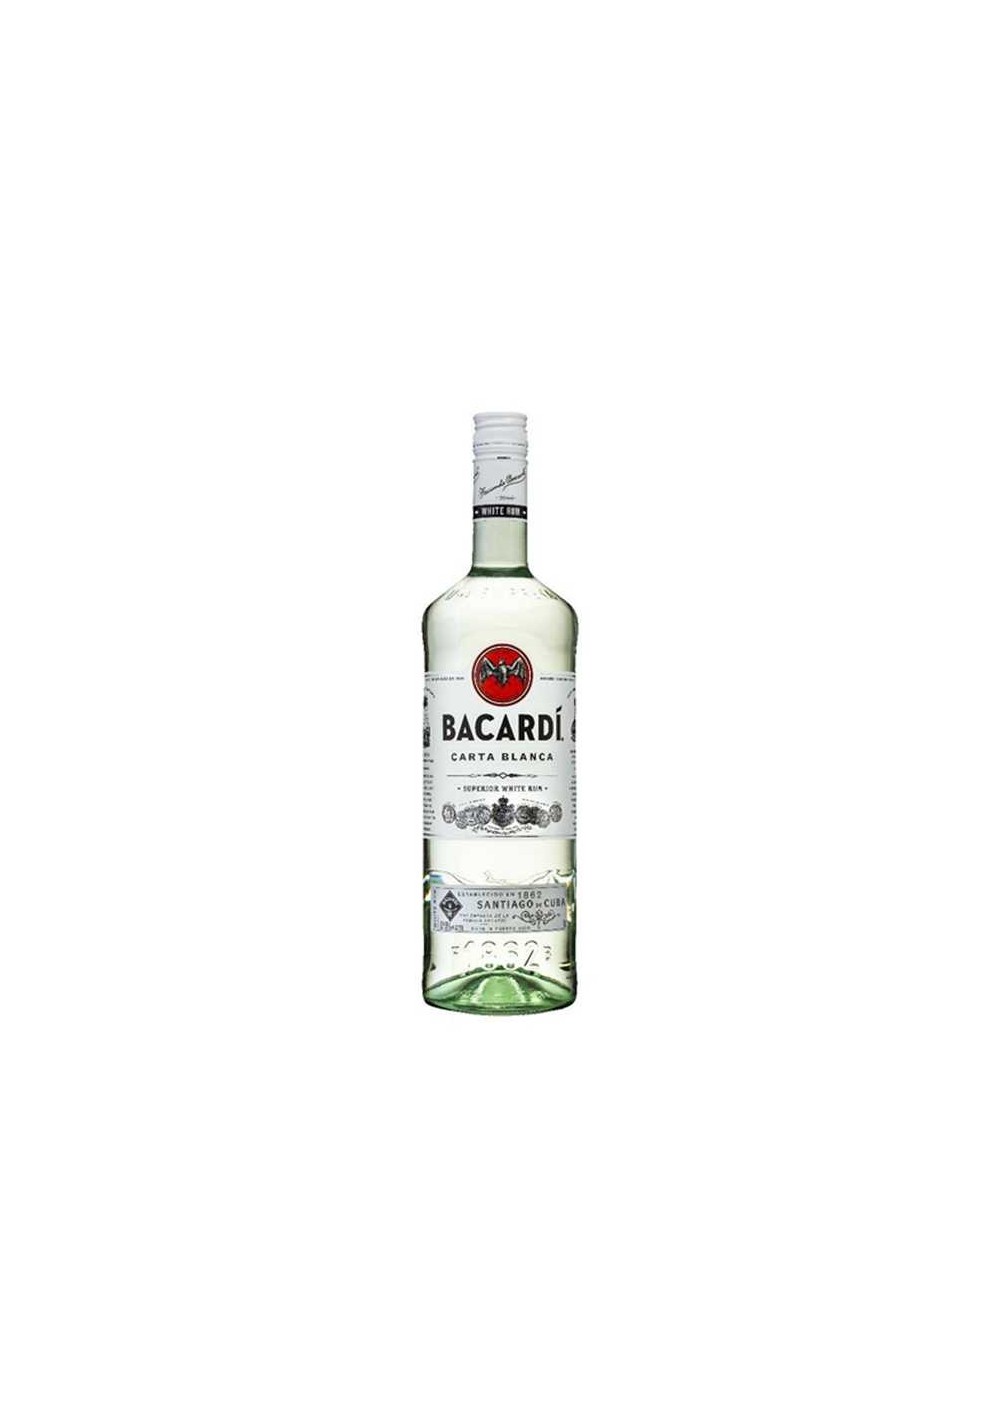 Bacardi - Carta Blanca - (1 liter)